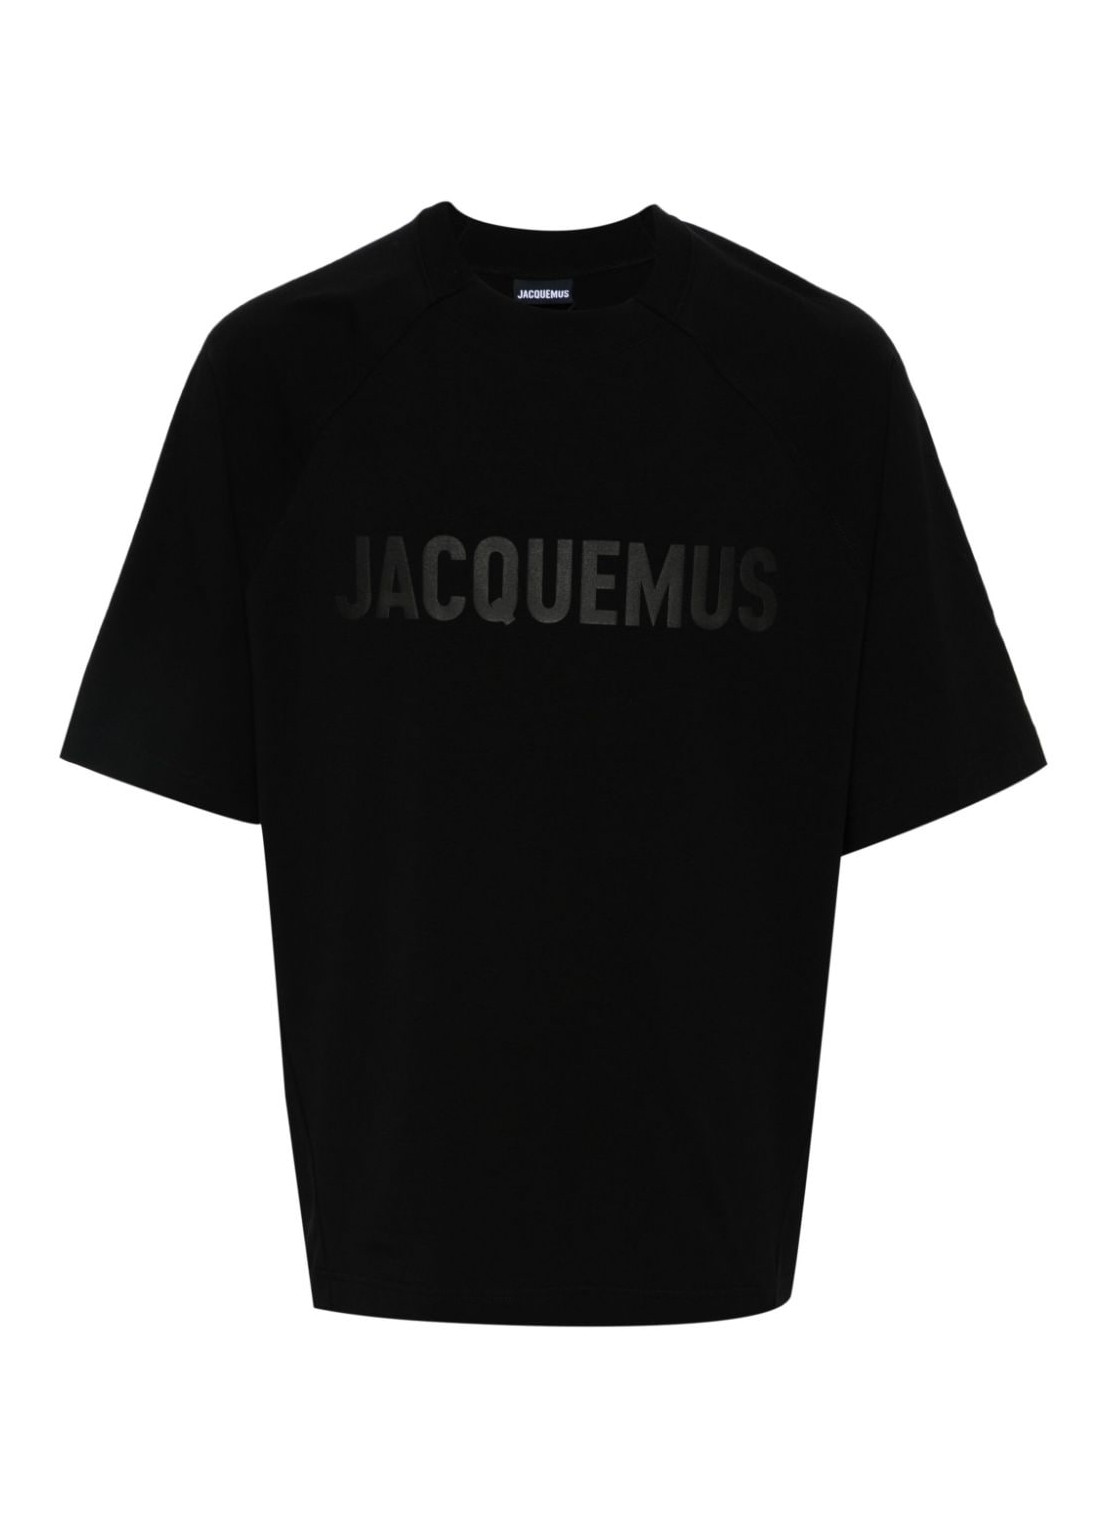 Camiseta jacquemus t-shirt man le tshirt typo 24e245js2122031 990 talla XL
 